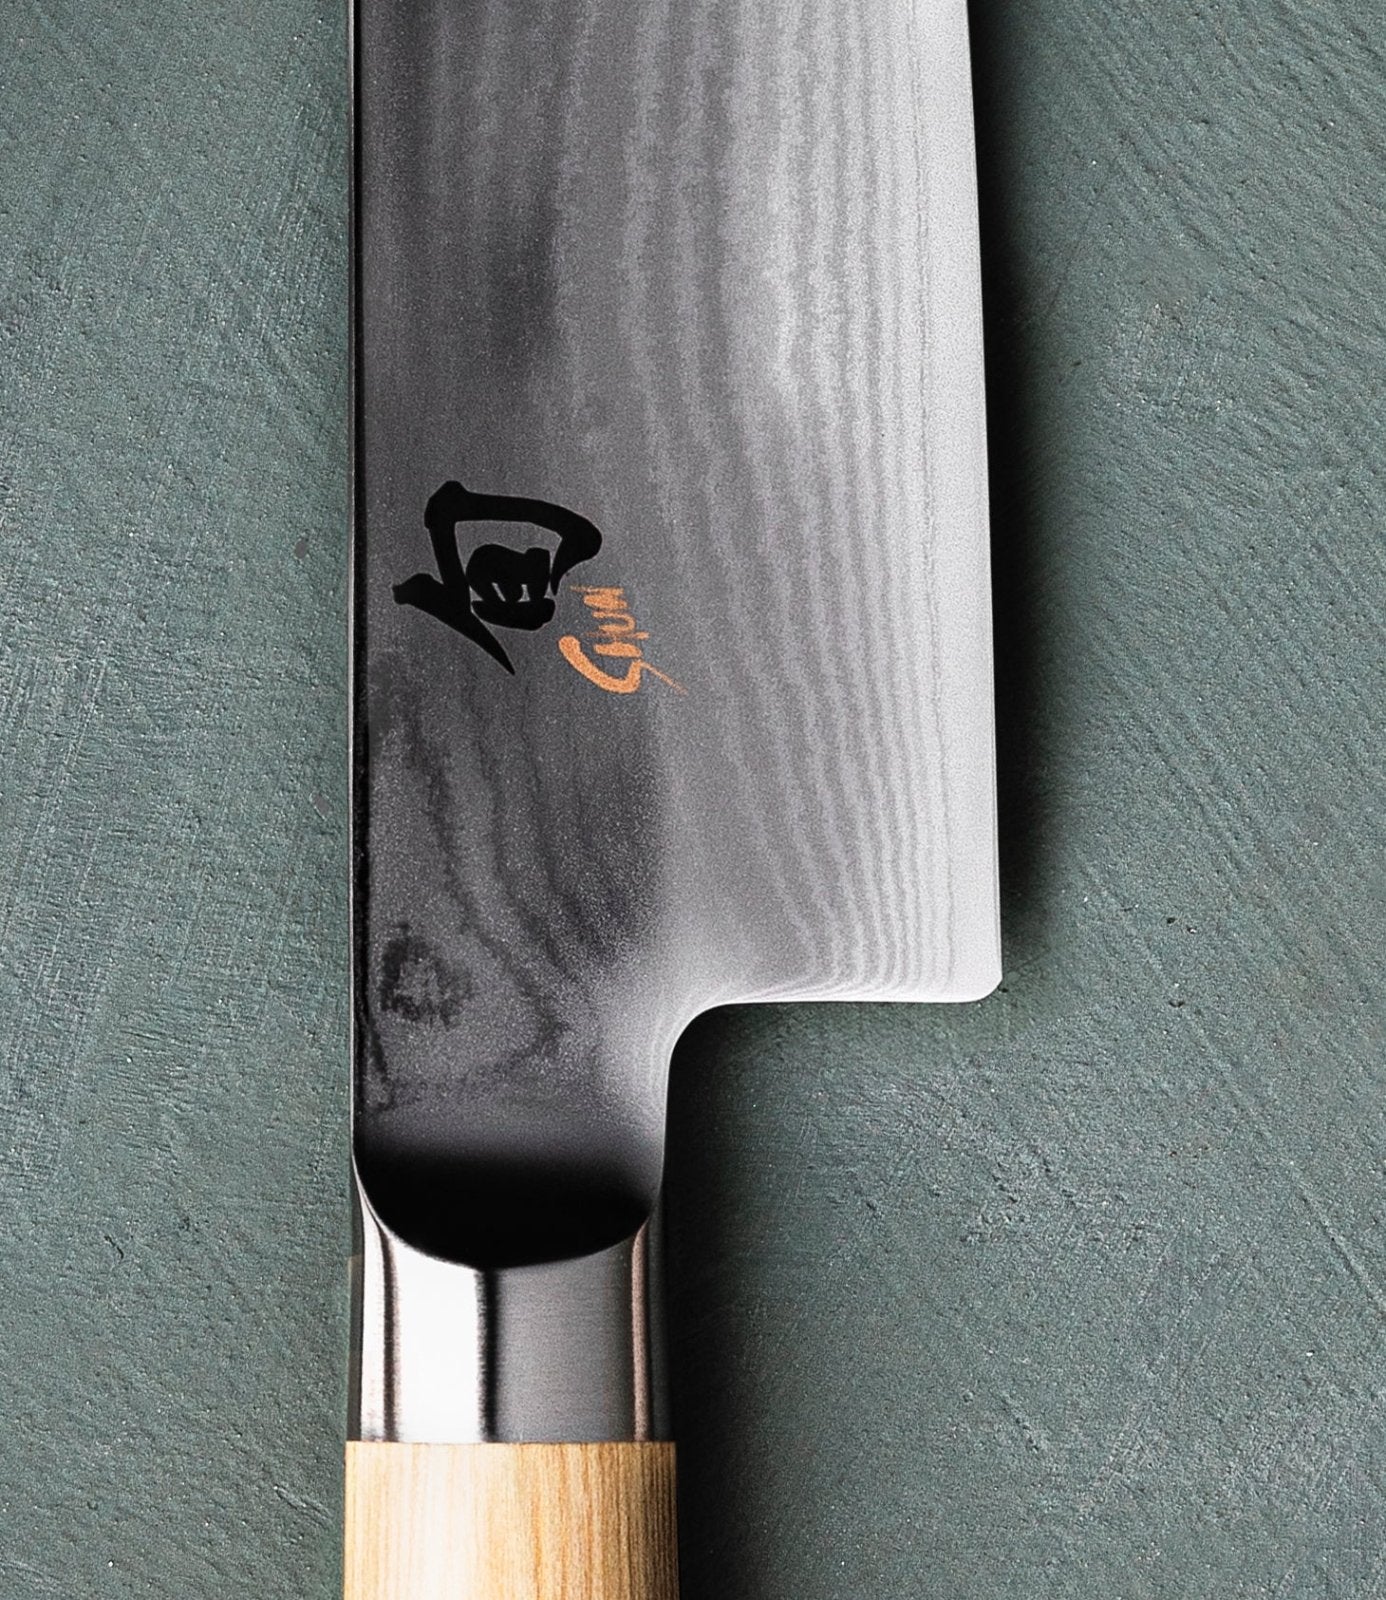 KAI Shun White 20cm Chefs Knife - KAI-DM-0706W - The Cotswold Knife Company